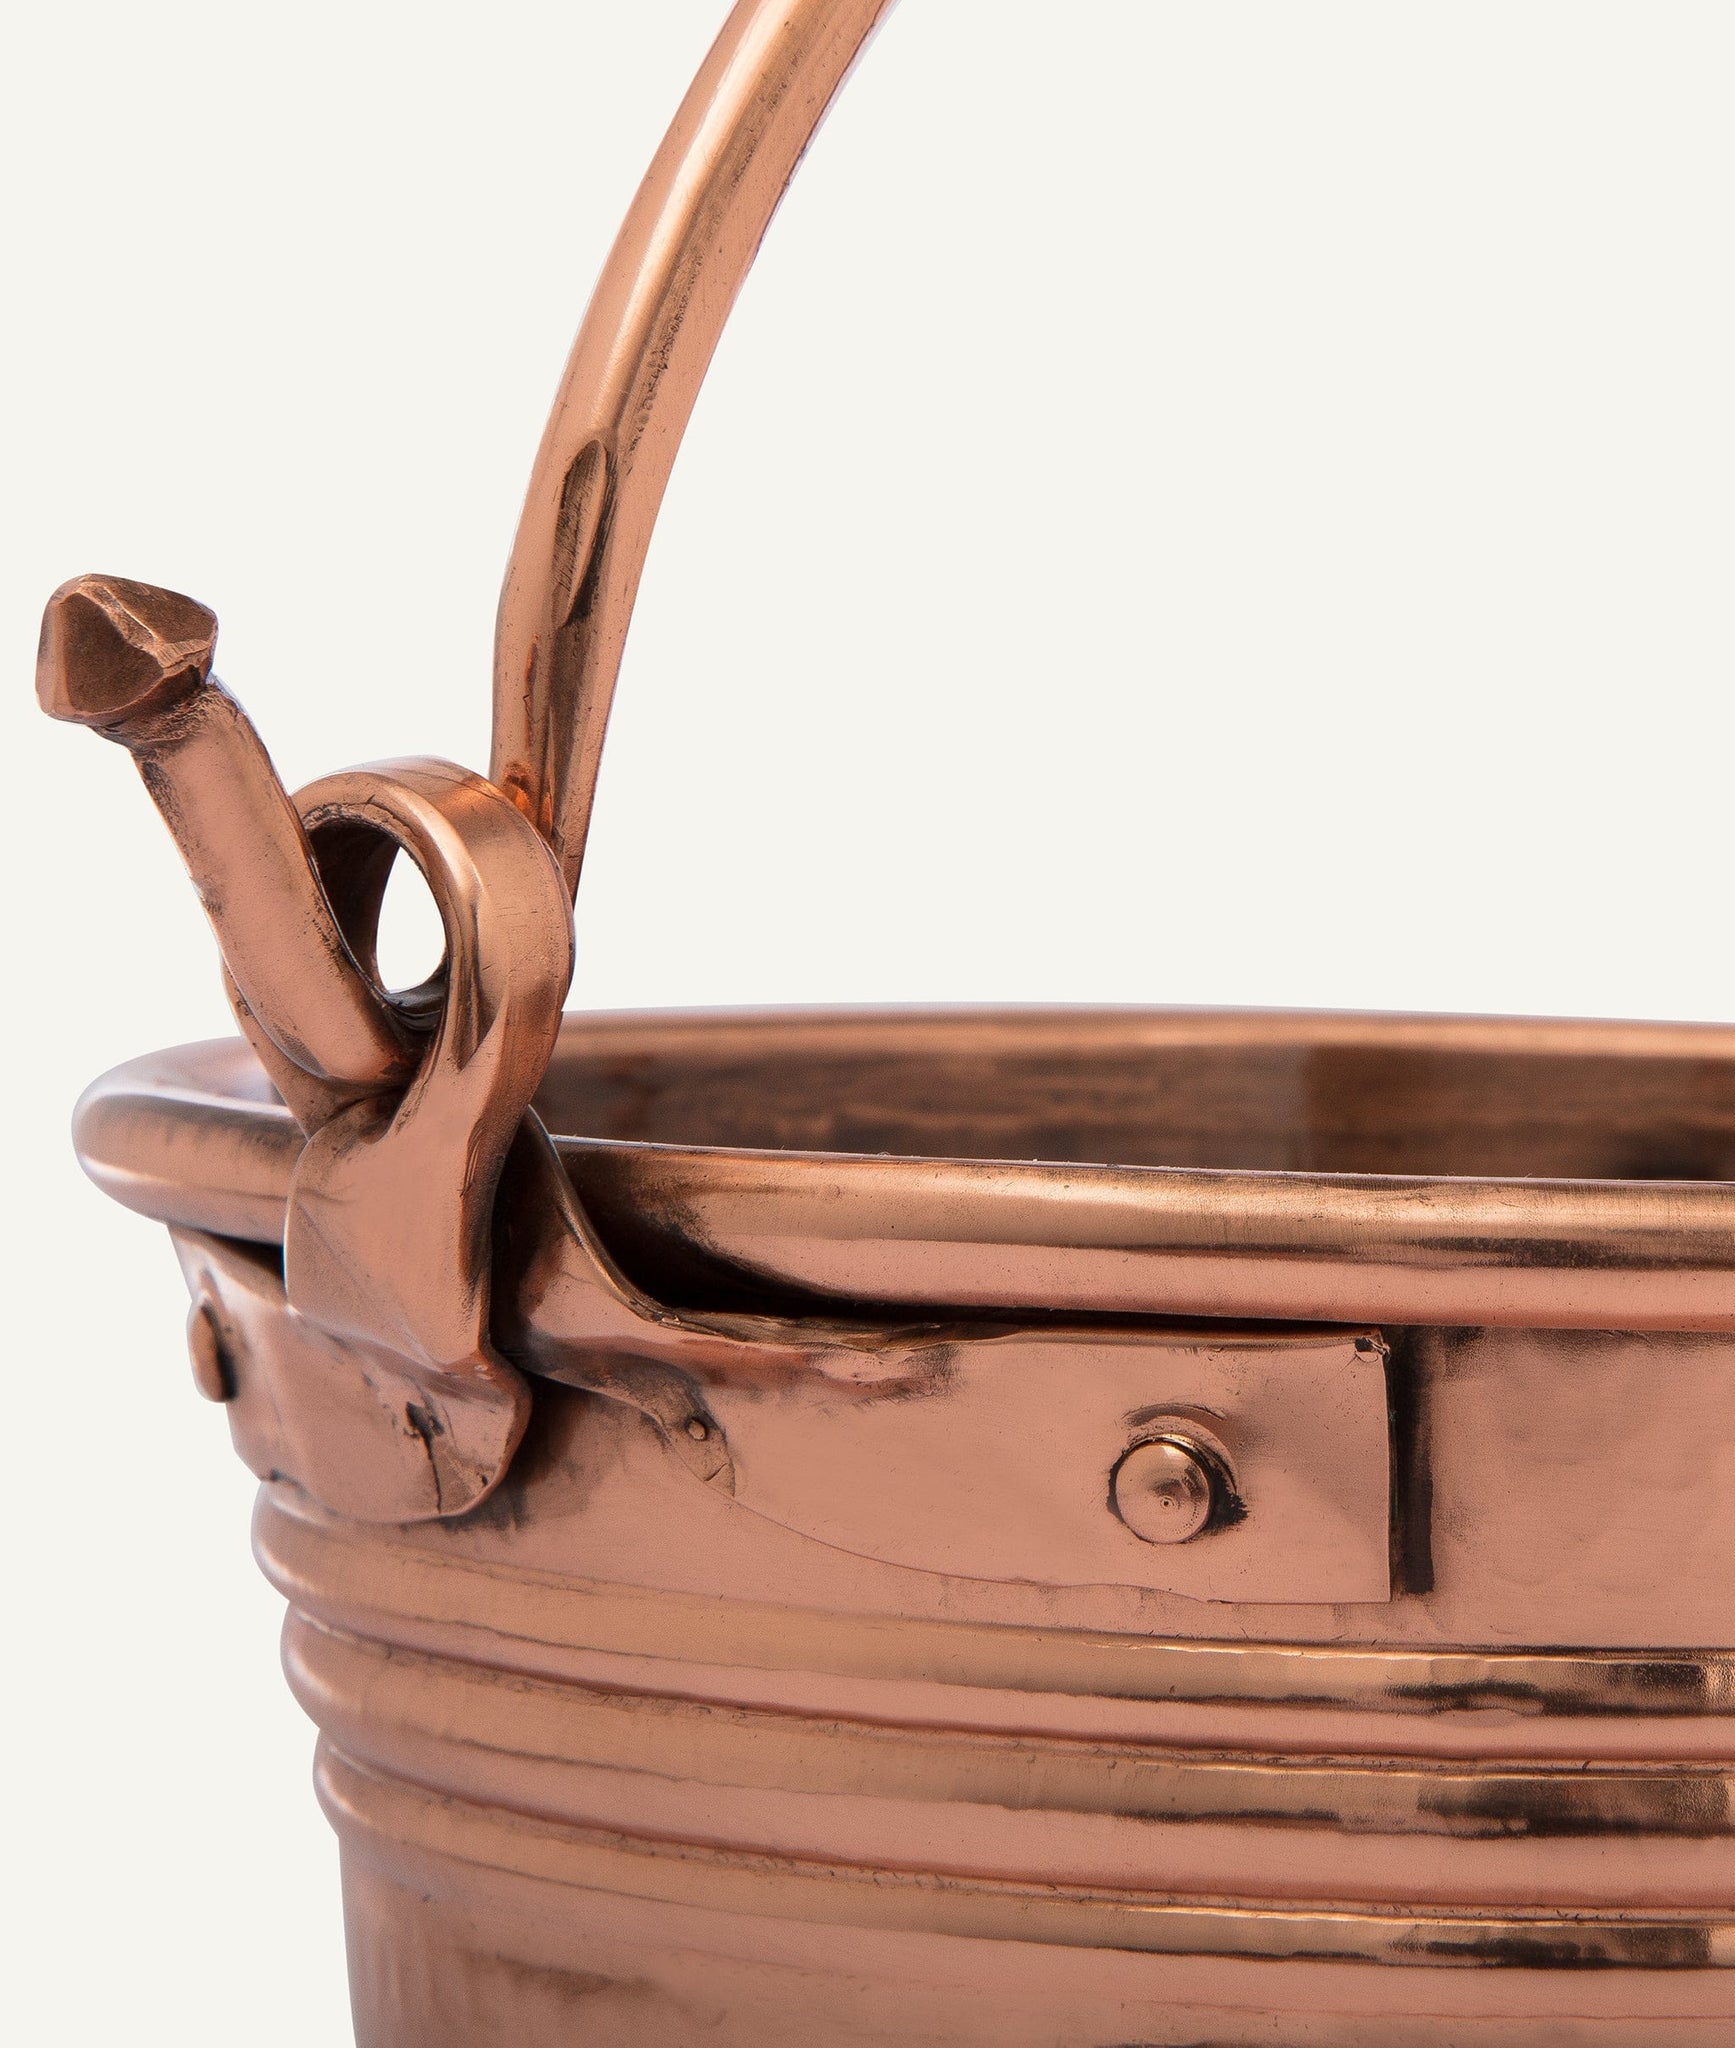 Champagne Bucket in Copper